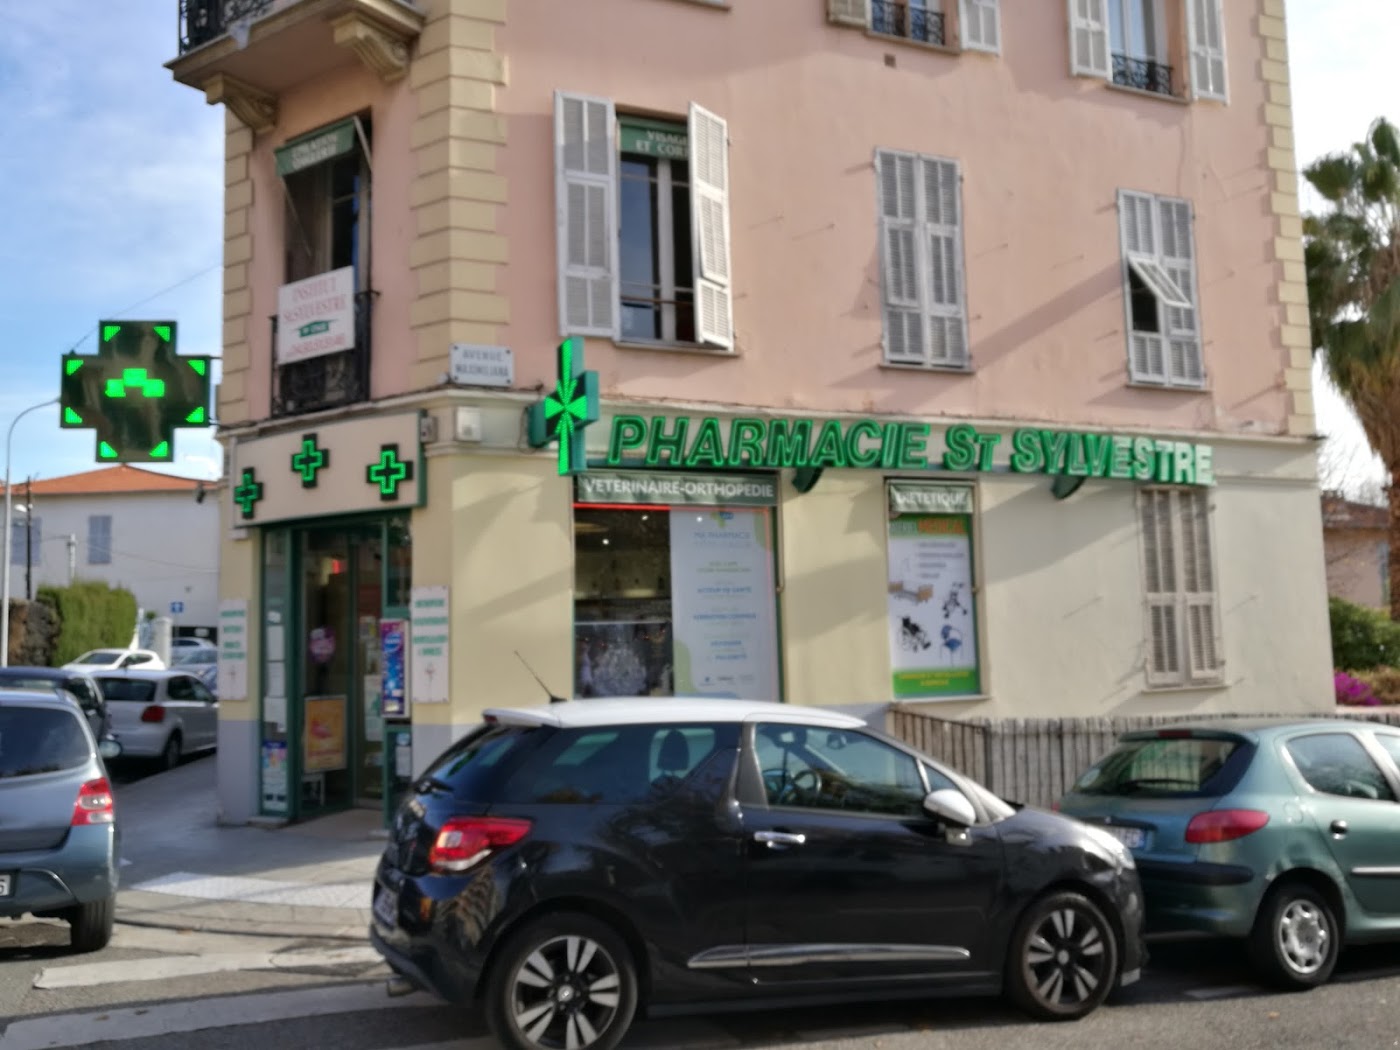 Pharmacie St Sylvestre